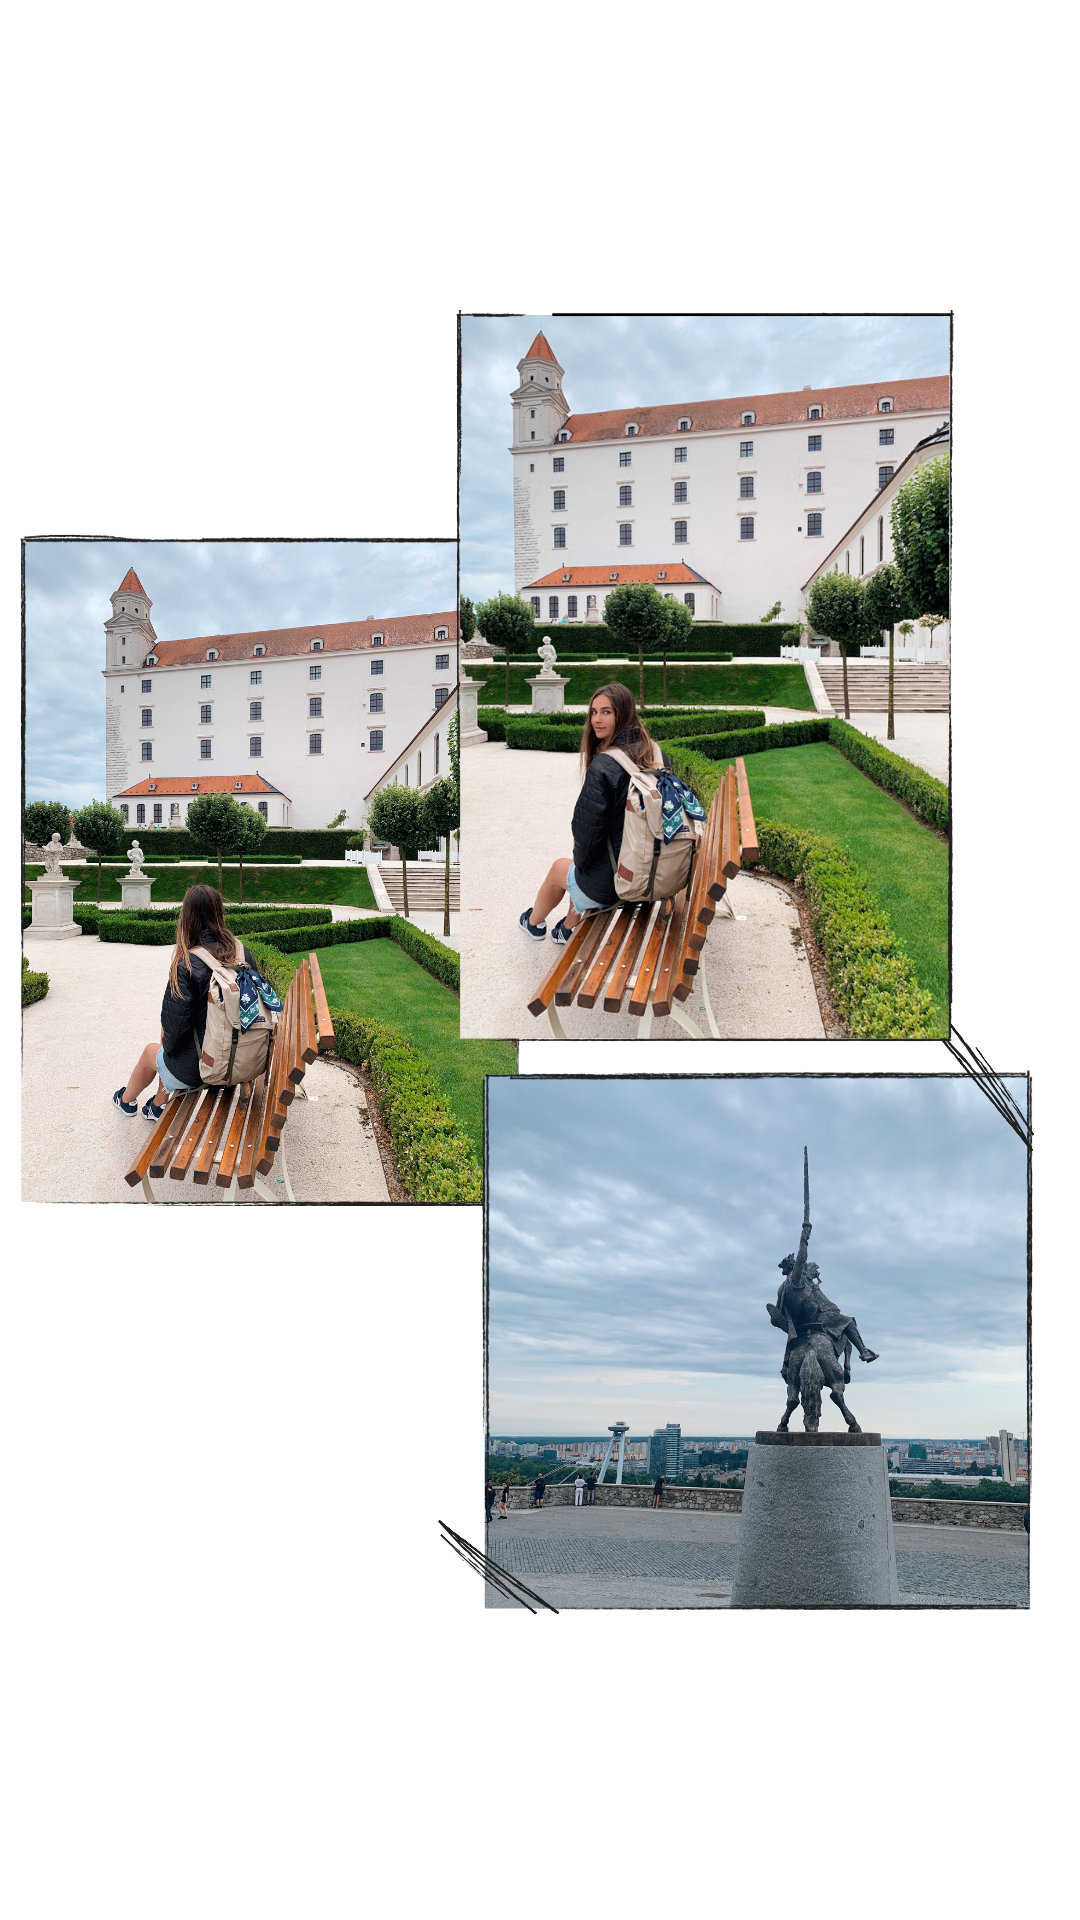 Photos from Bratislava Castle.